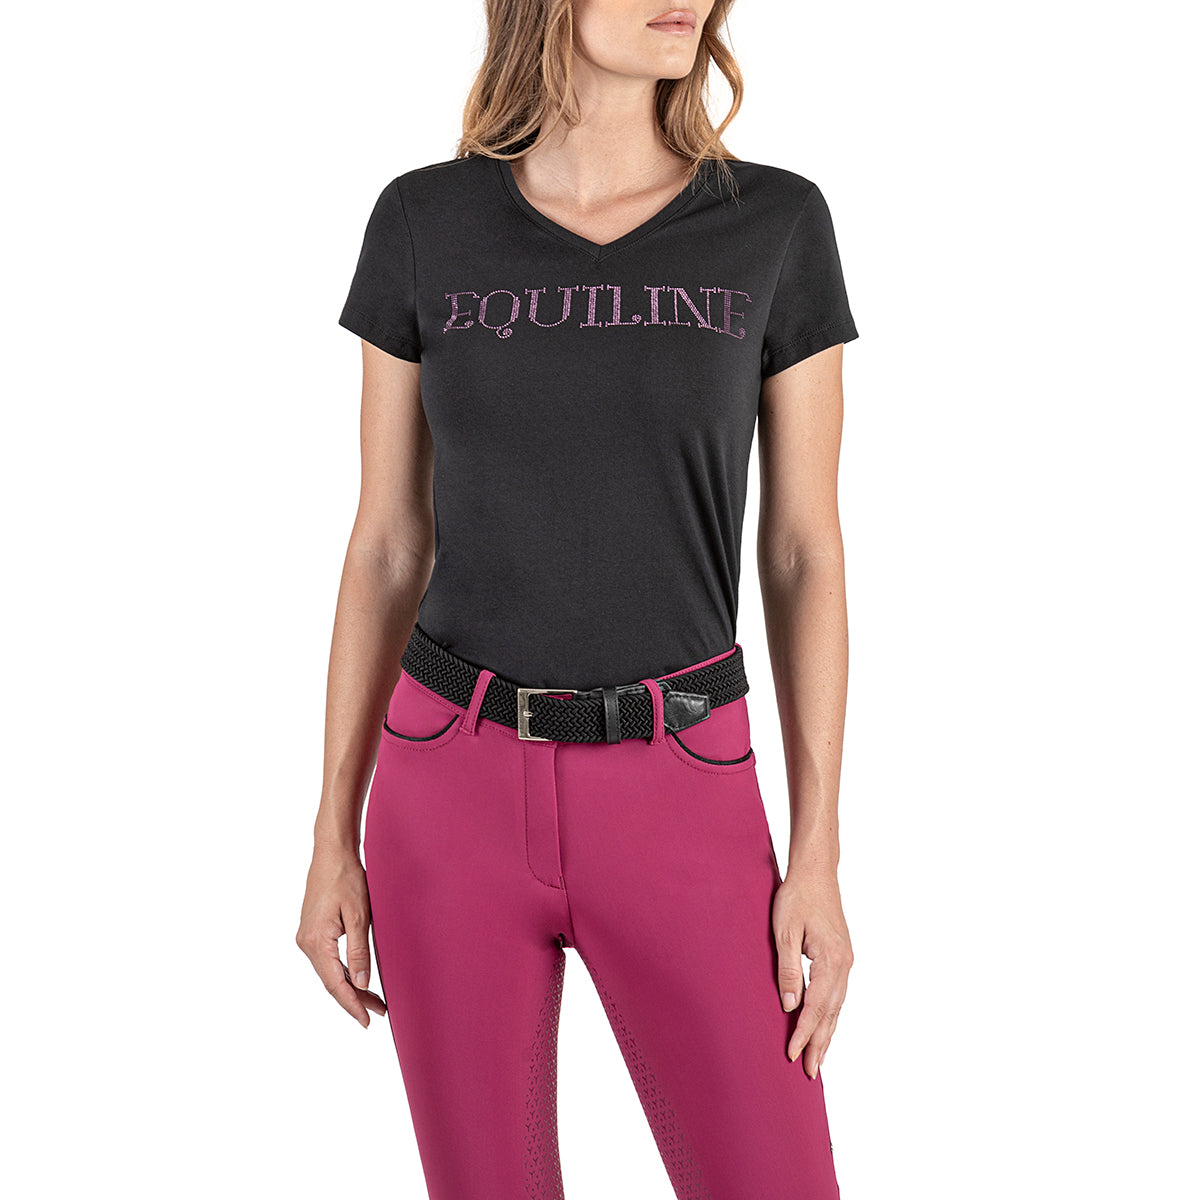 Equiline Women's GigerG T-Shirt